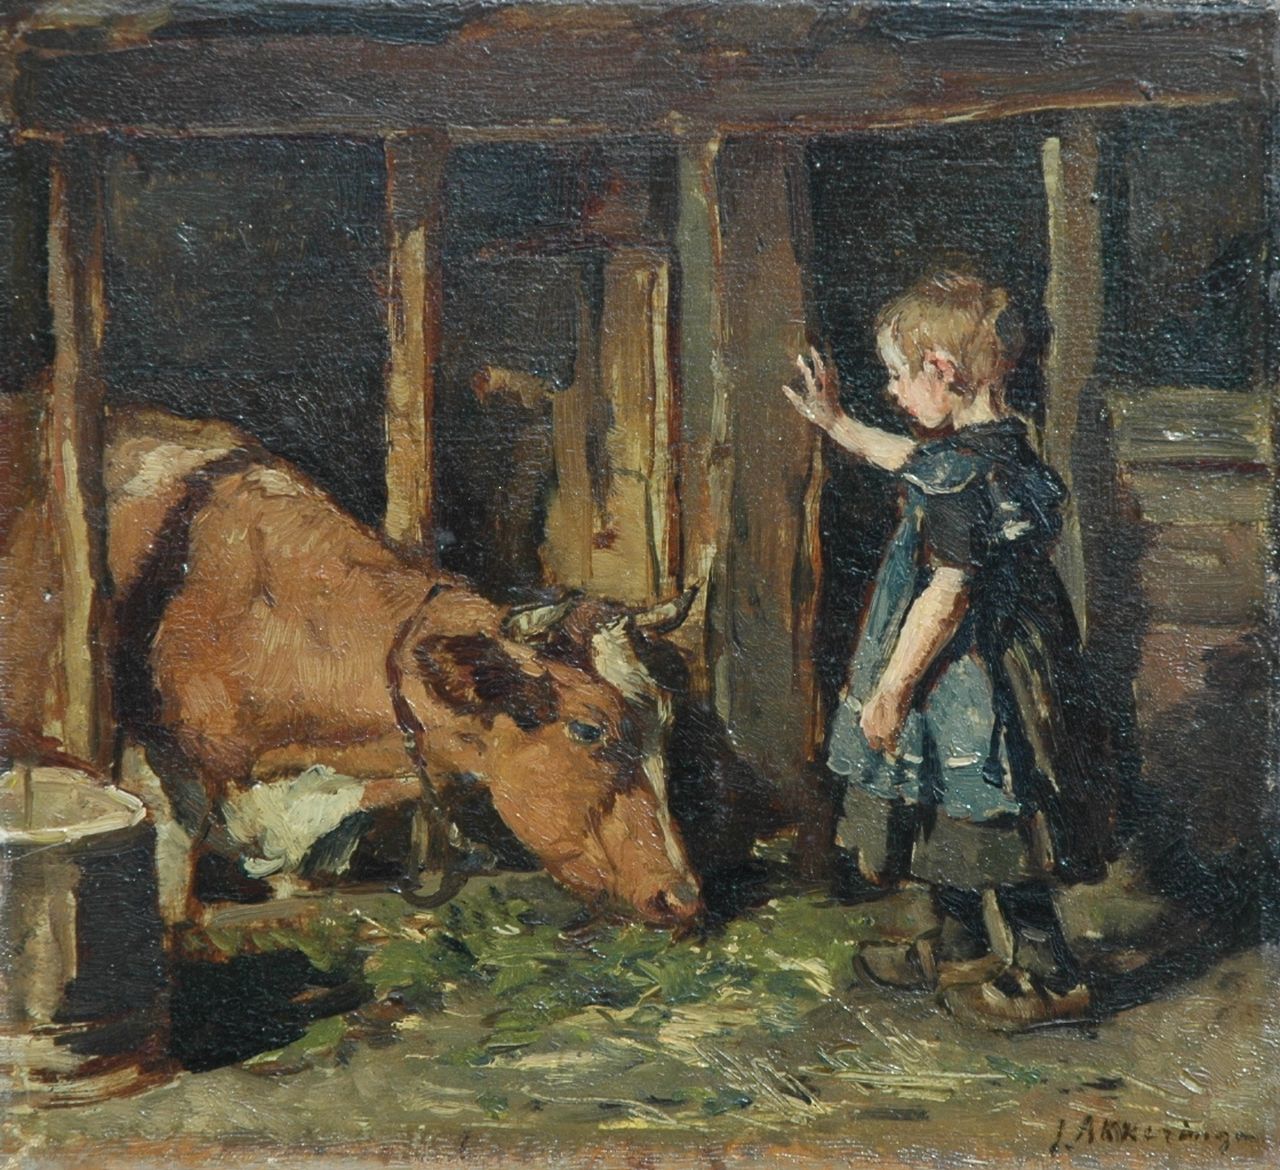 Akkeringa J.E.H.  | 'Johannes Evert' Hendrik Akkeringa, Feeding the cow, oil on panel 23.9 x 25.9 cm, signed l.r. and on the reverse Augts. 1909